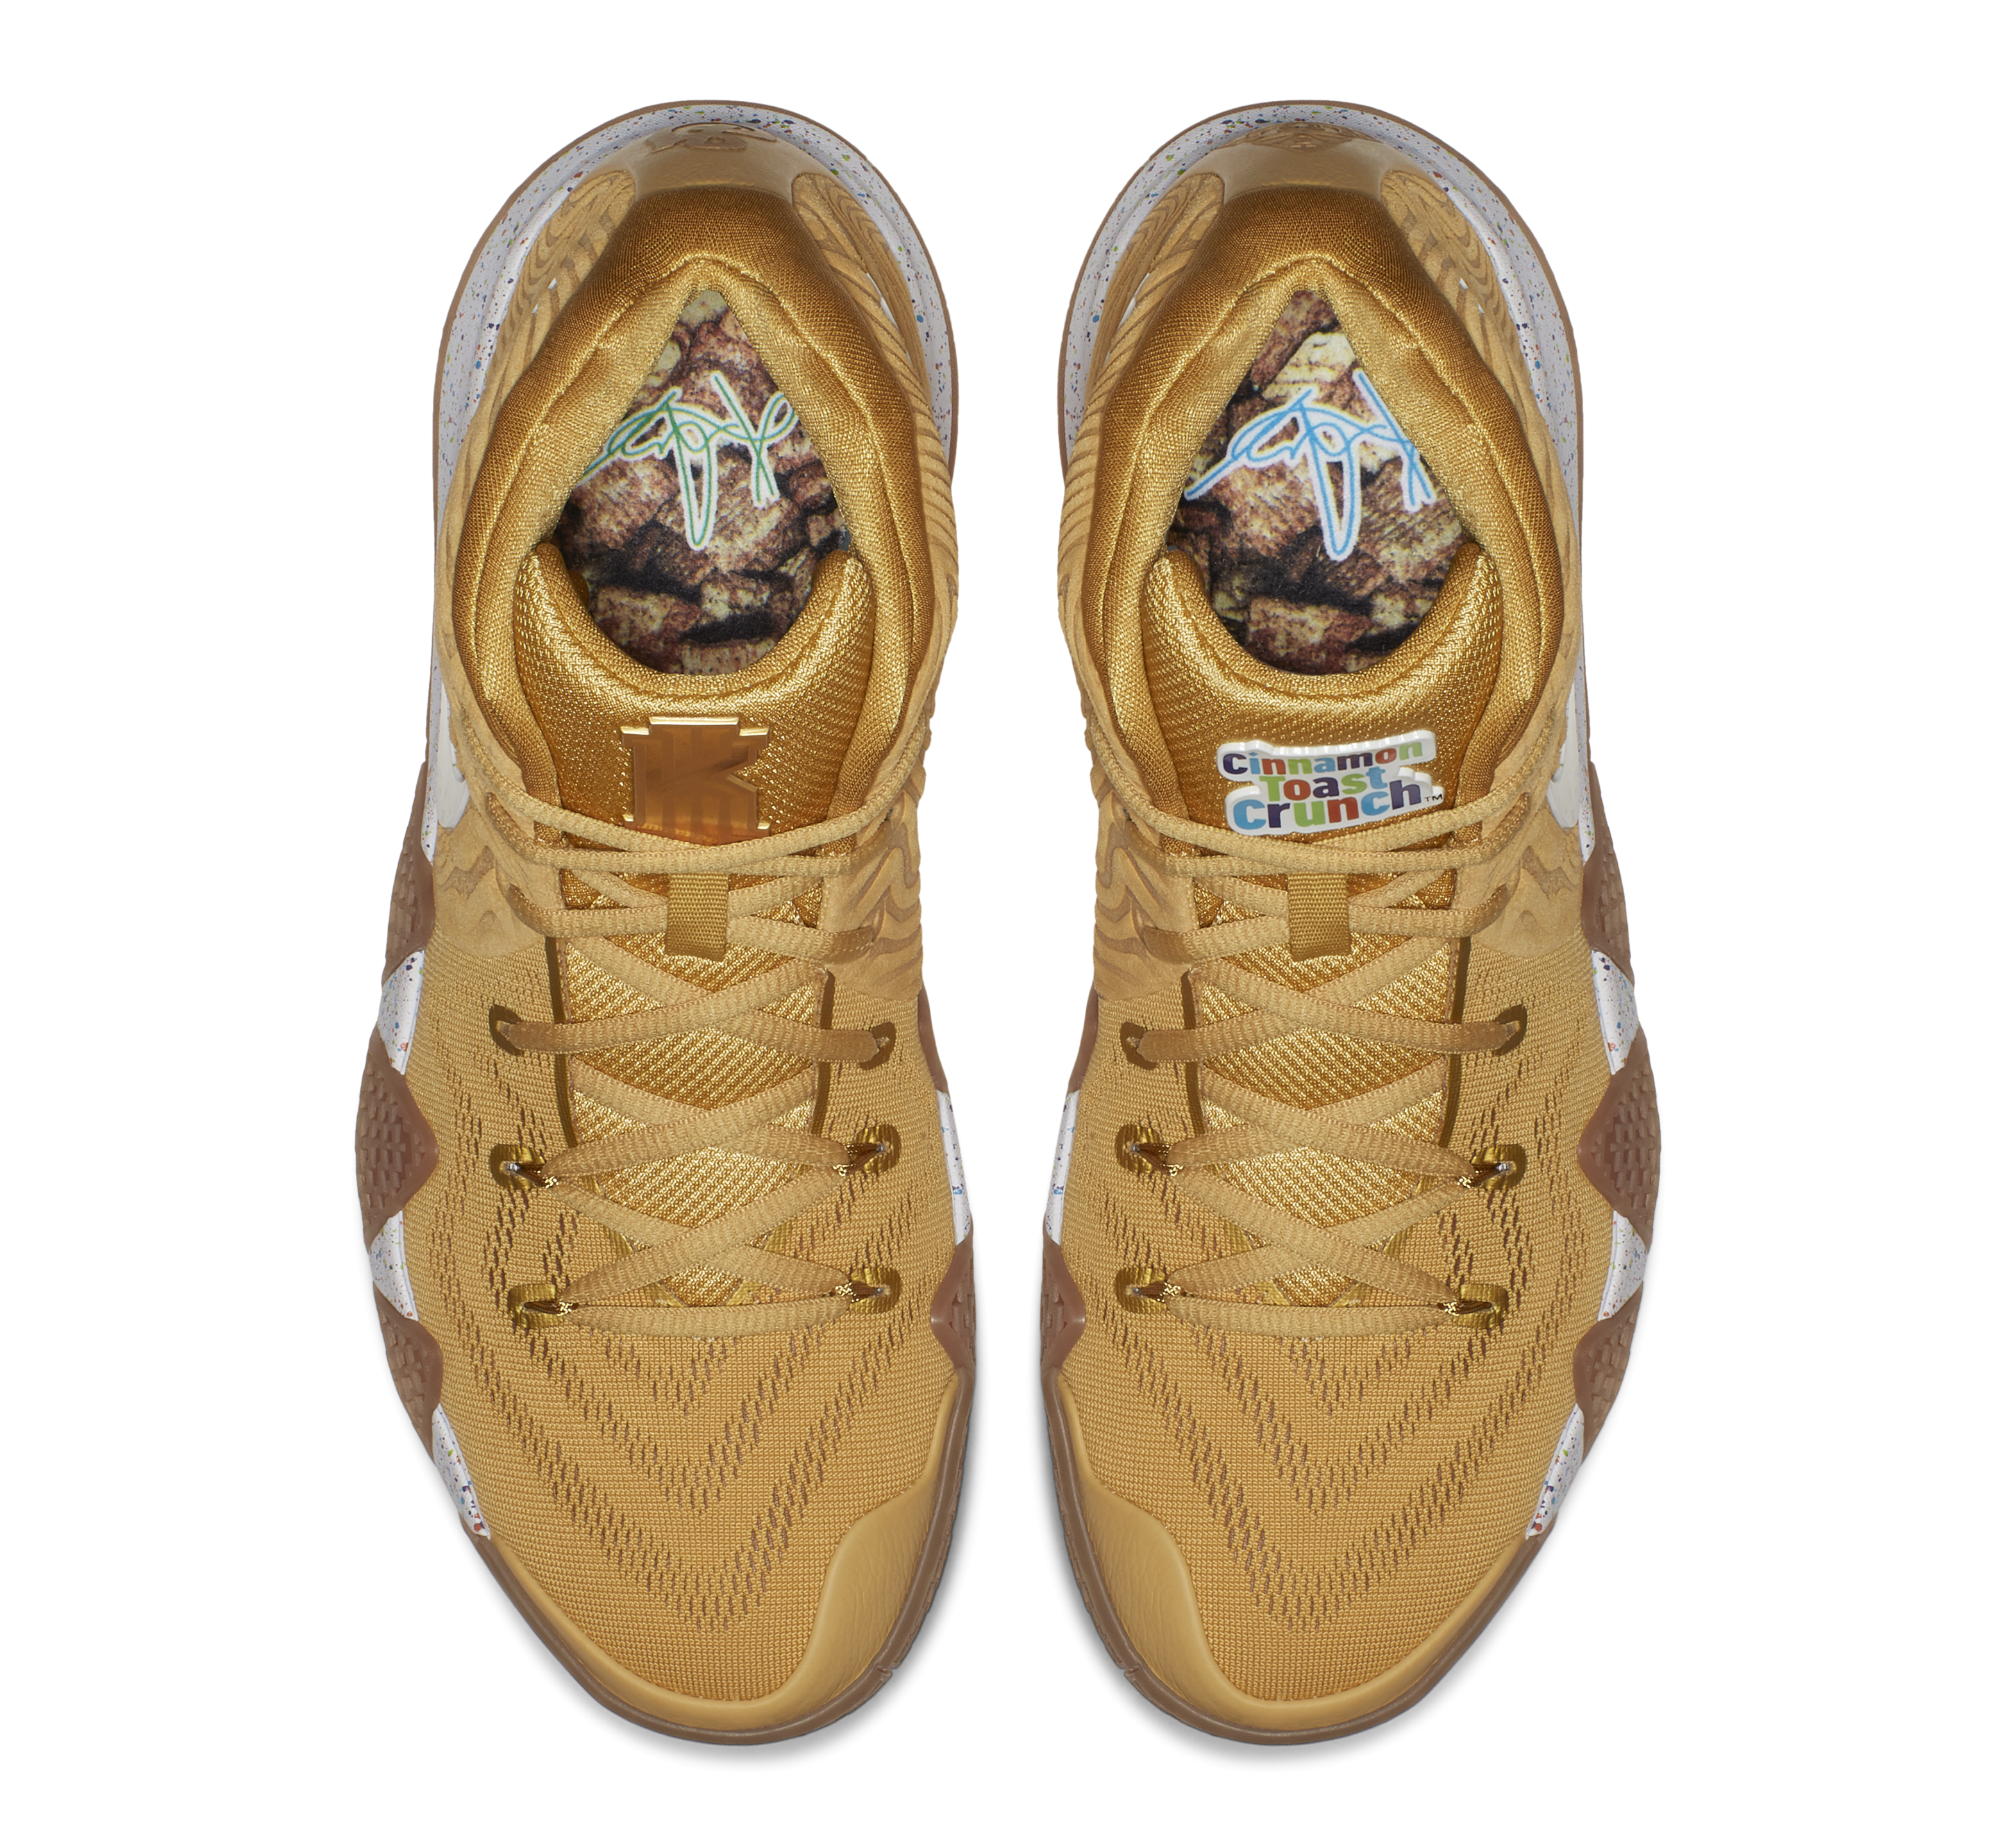 Nike Kyrie 4 &#x27;Cinnamon Toast Crunch&#x27; BV0426-900 (Top)